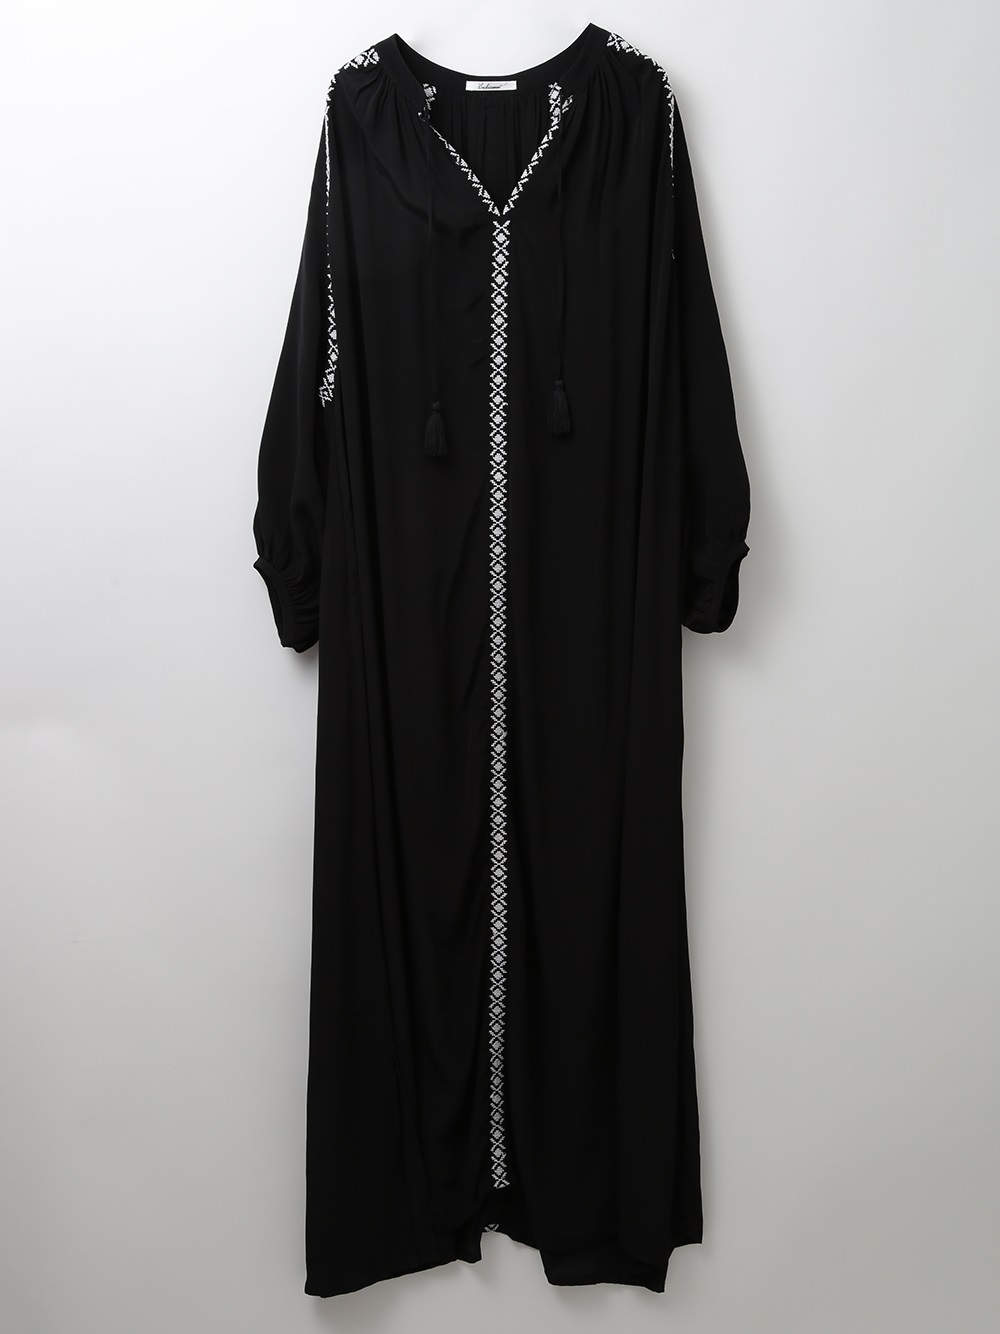 Embroidered　Dress(00ブラック-フリー)